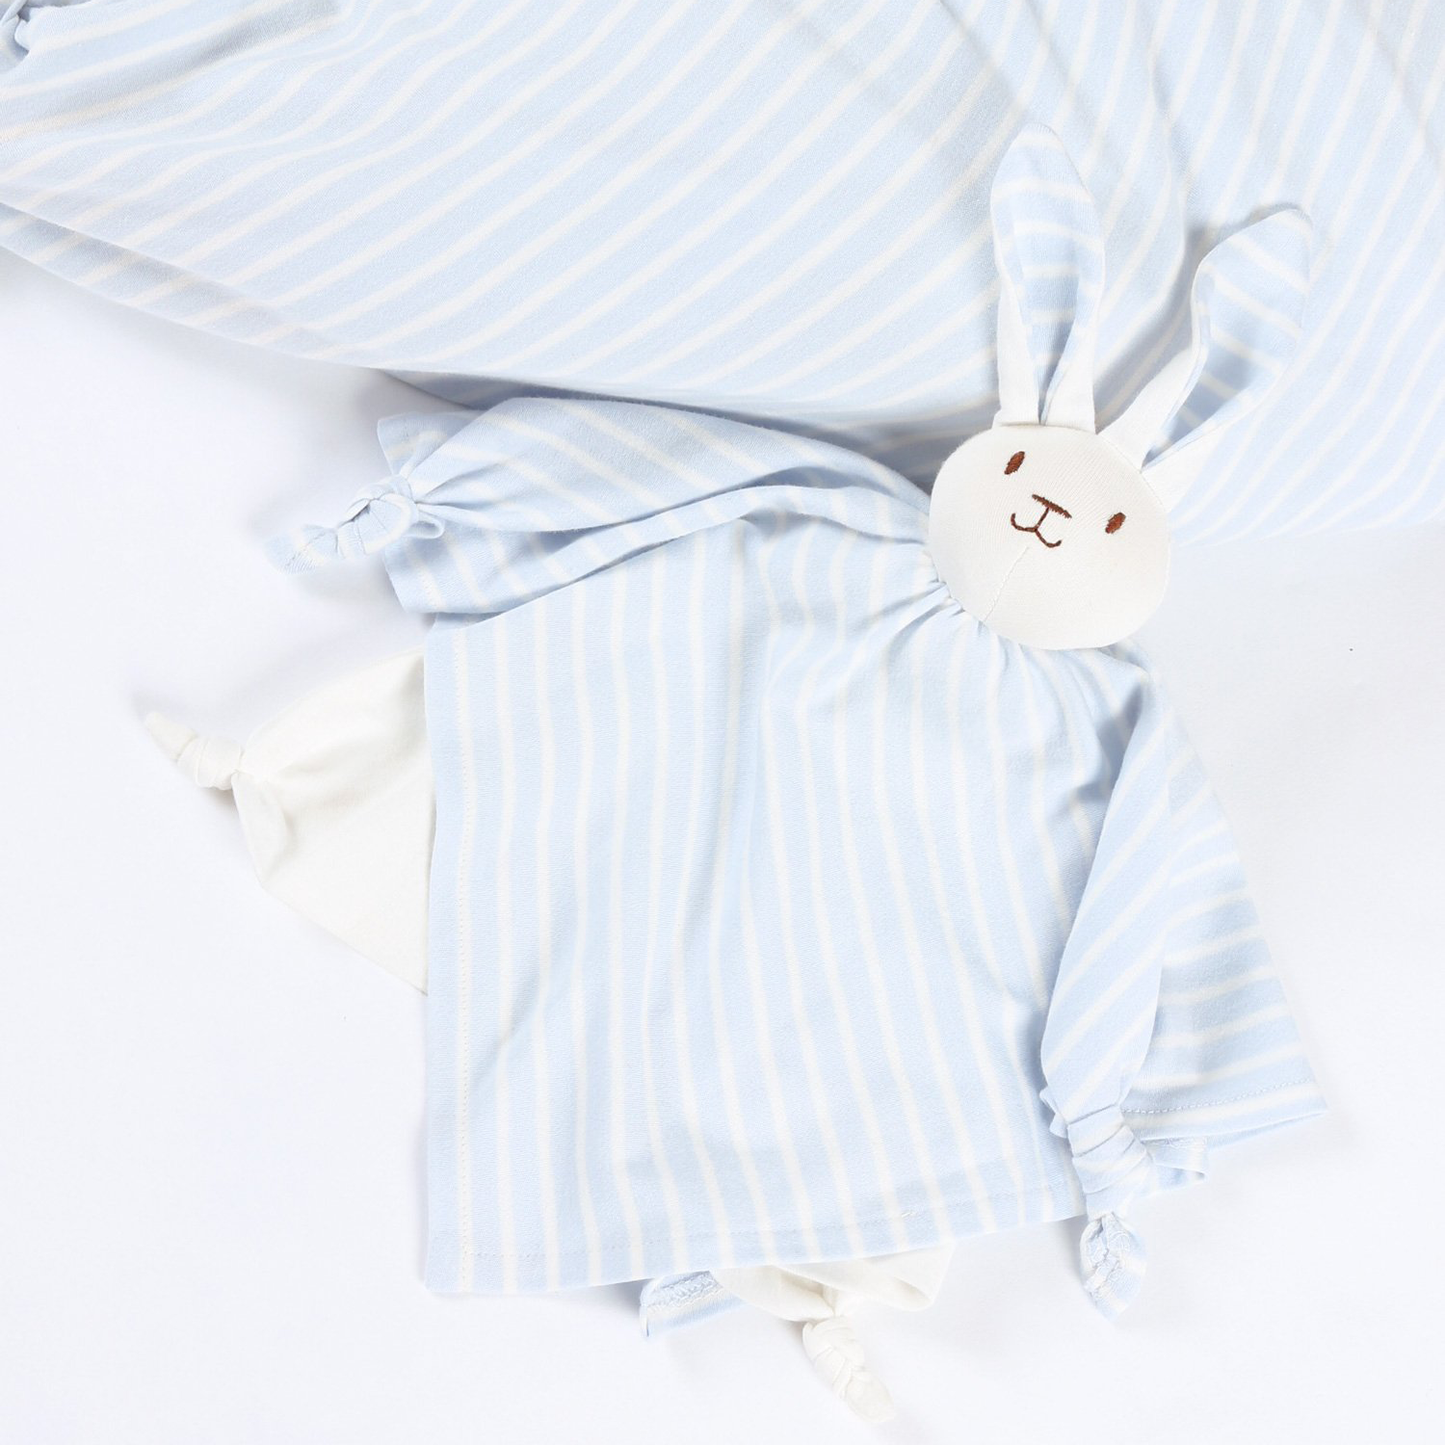 Under The Nile Organic Cotton Lovey Blanket Friend - Blue Stripe Bunny (10")